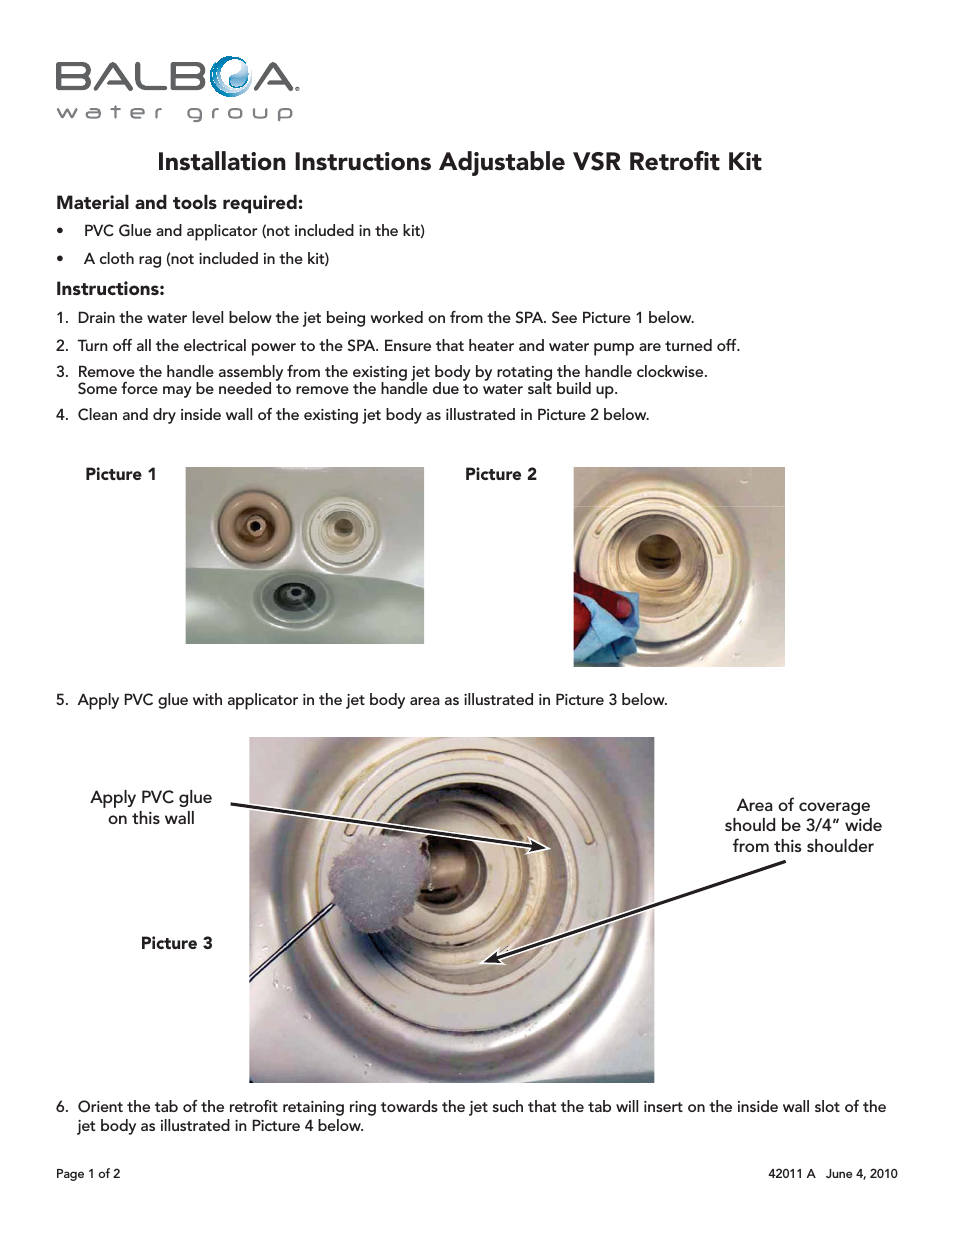 Adjustable VSR Retrofit Kit